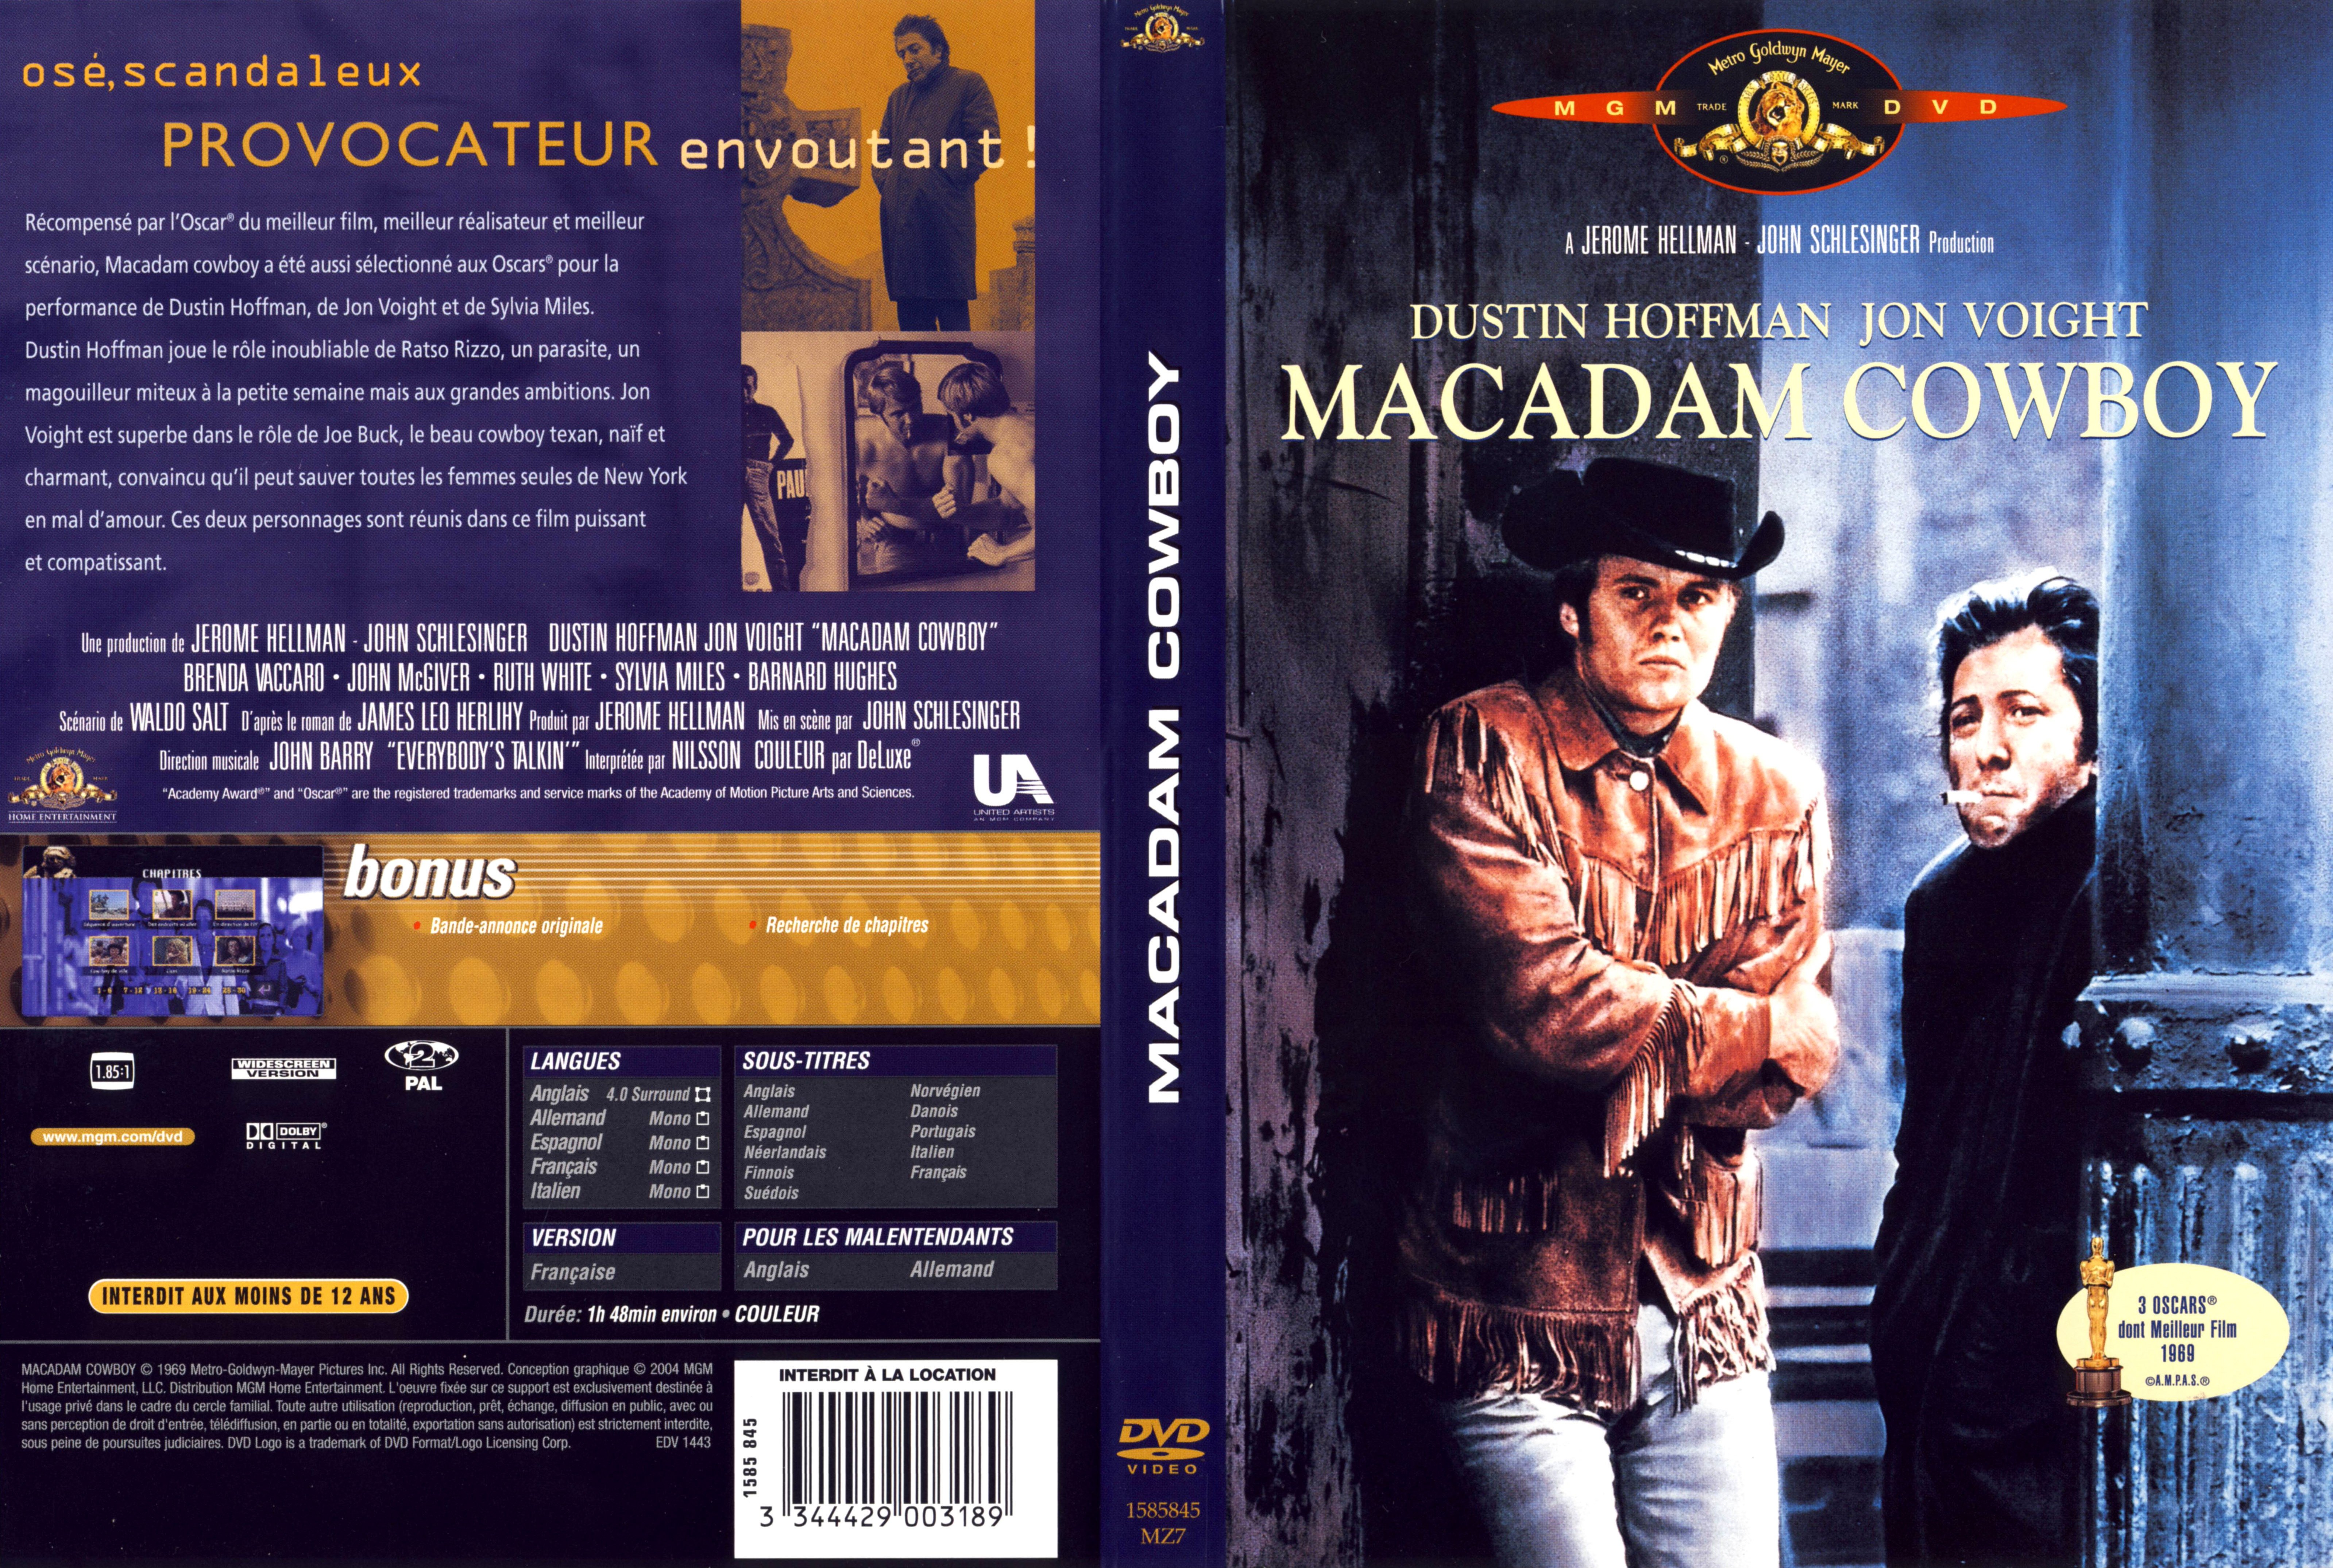 Jaquette DVD Macadam cowboy